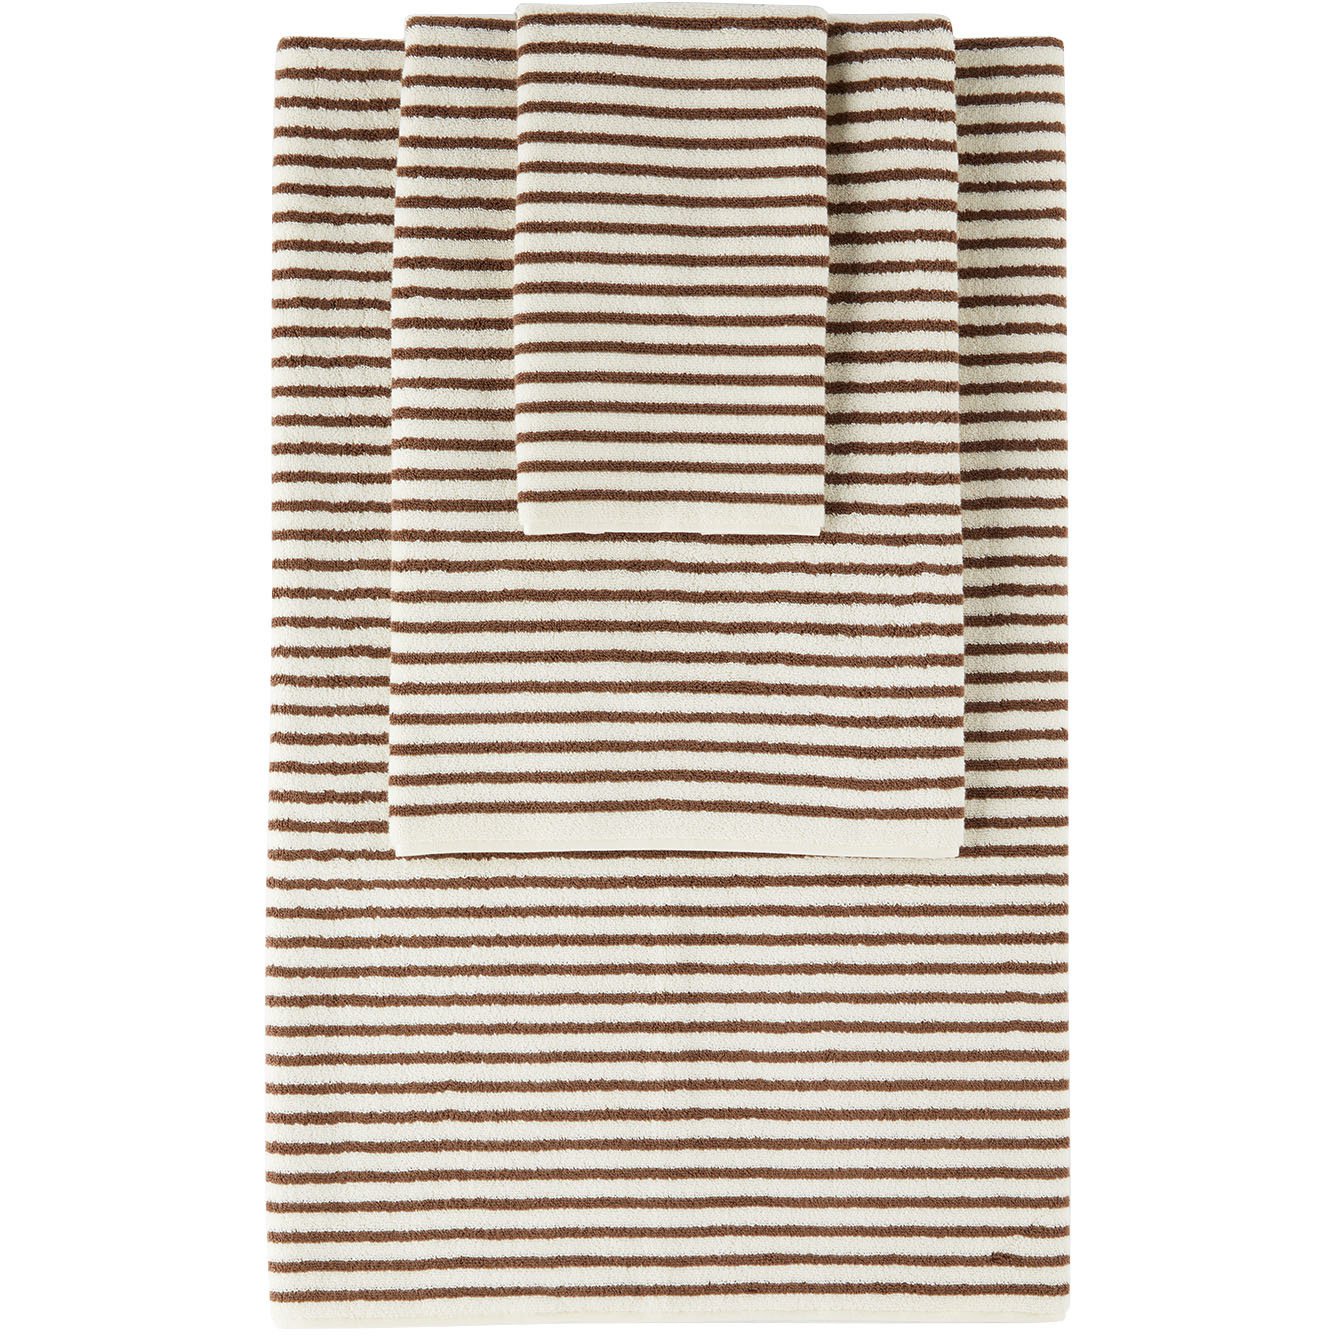 Tekla Off-White & Brown Organic Three-Piece Towel Set